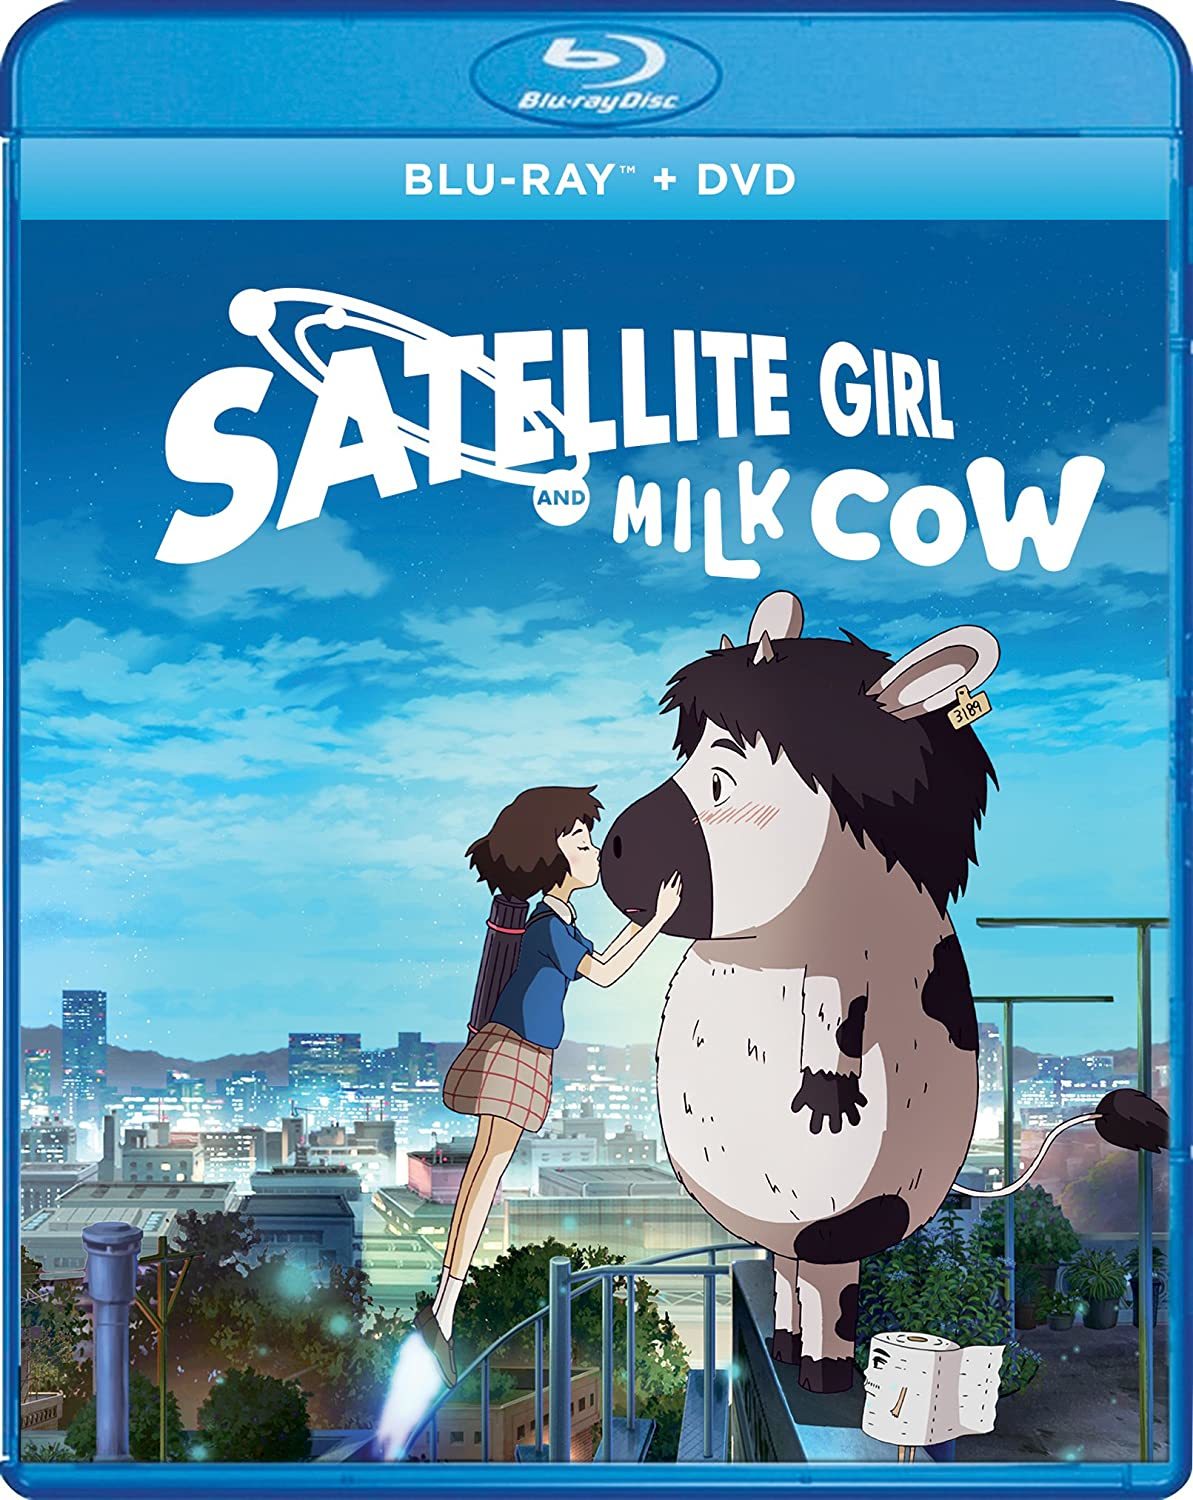 Satellite girl and milk cow bluray dvd combo